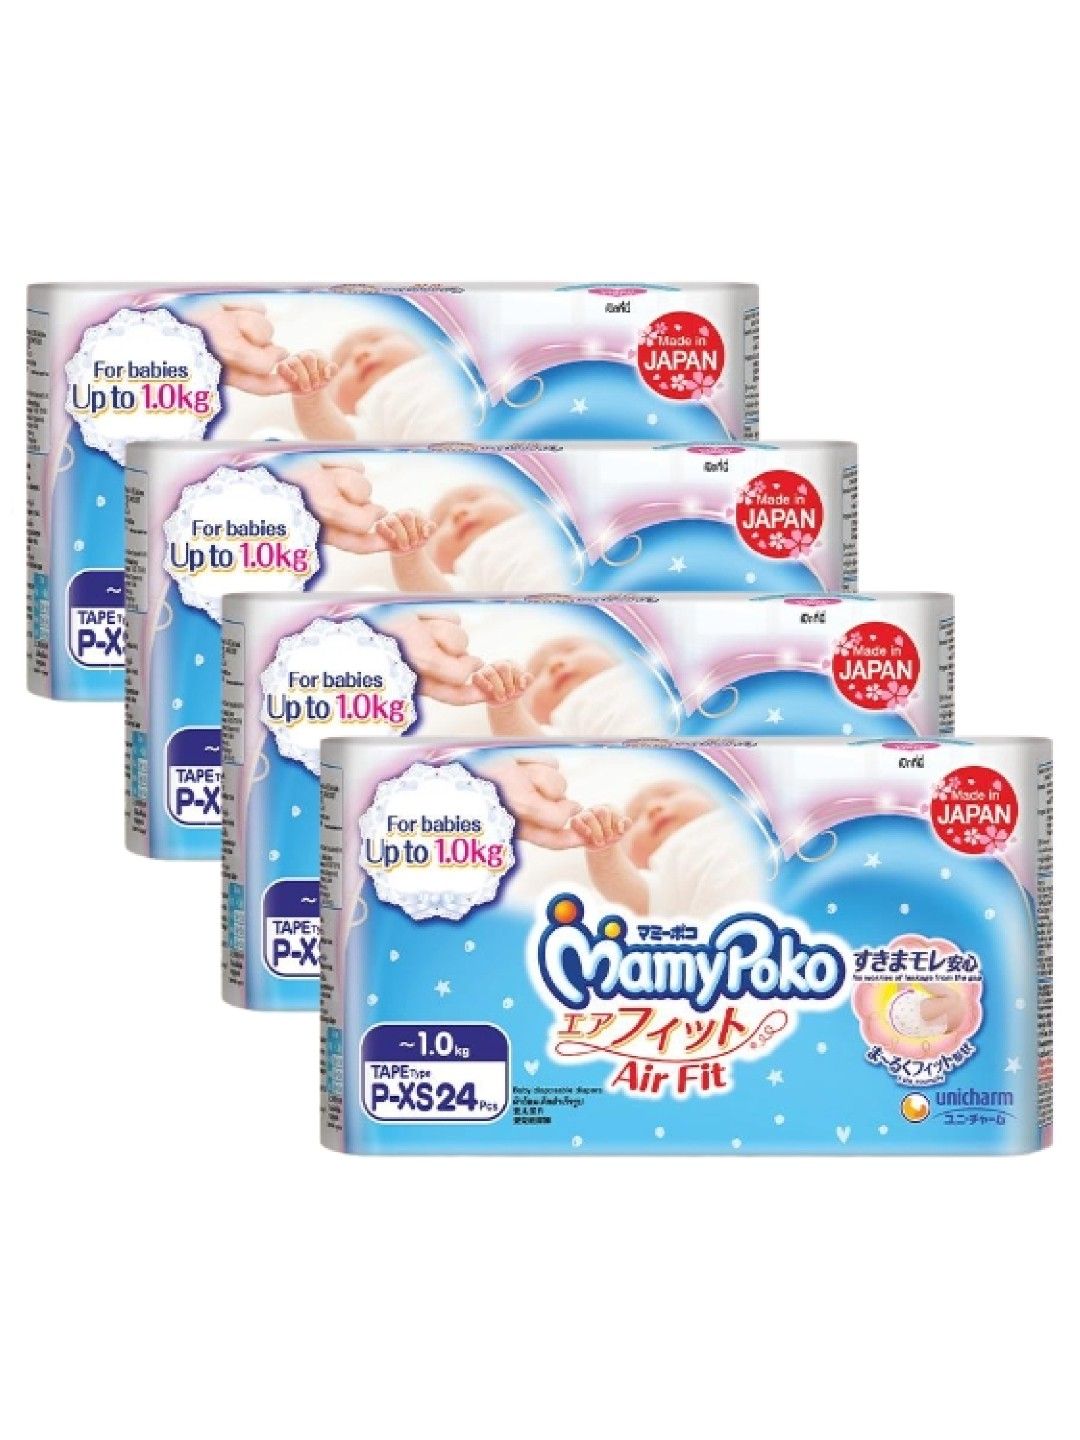 MamyPoko Airfit (Preemie) Tape Diaper P-XS 24s x 4 packs (96 pcs)